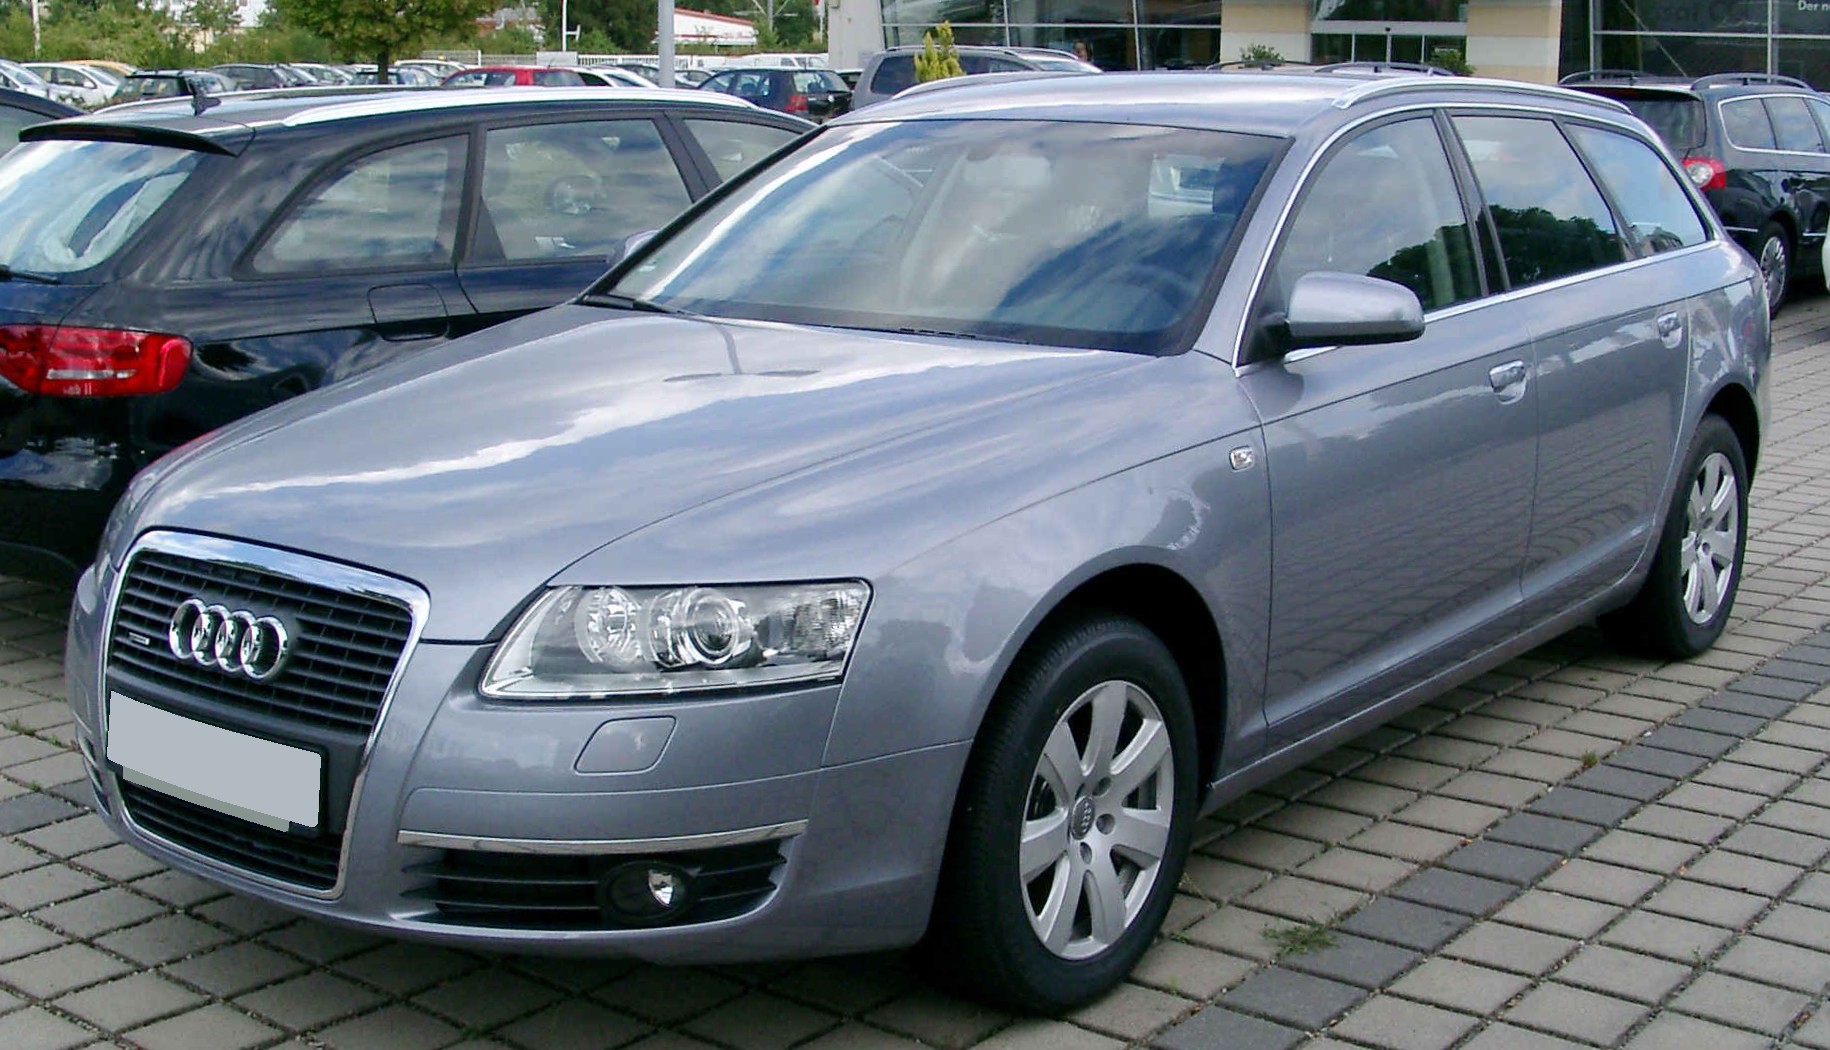 File:Audi A6 C6 Facelift rear 20100801.jpg - Wikimedia Commons